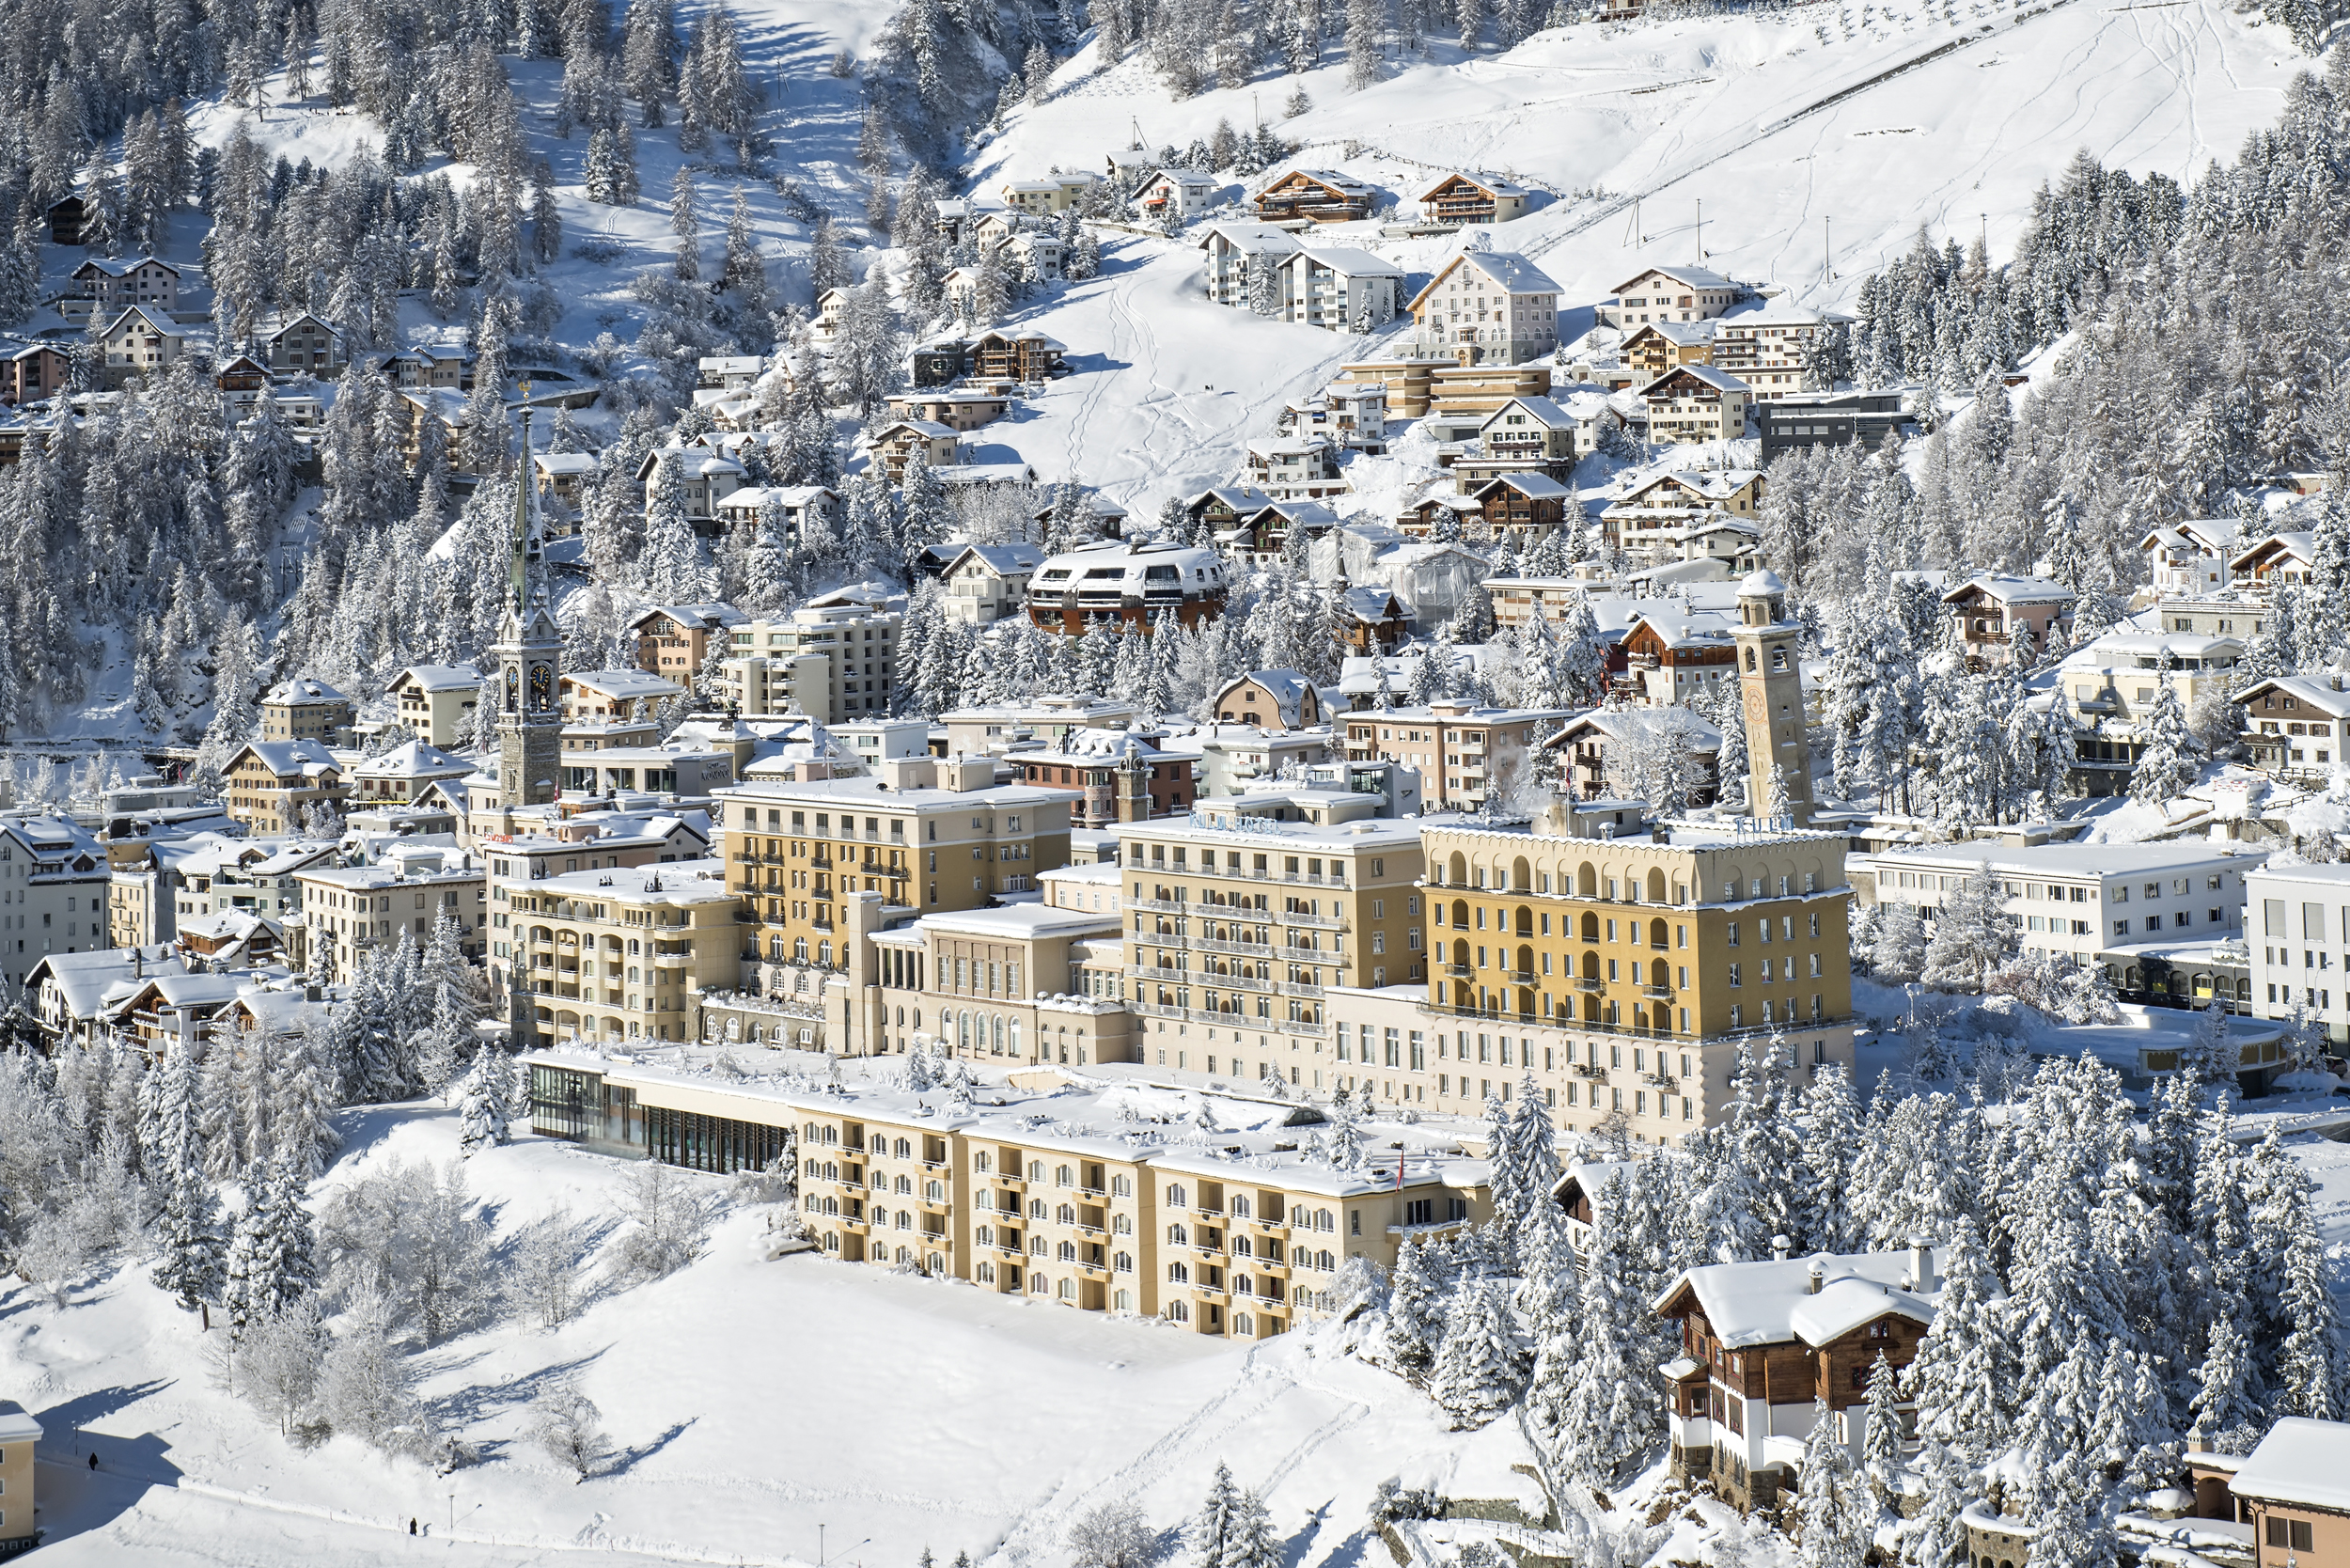 Kulm Hotel St. Moritz: Old world opulence in Switzerland’s winter playground